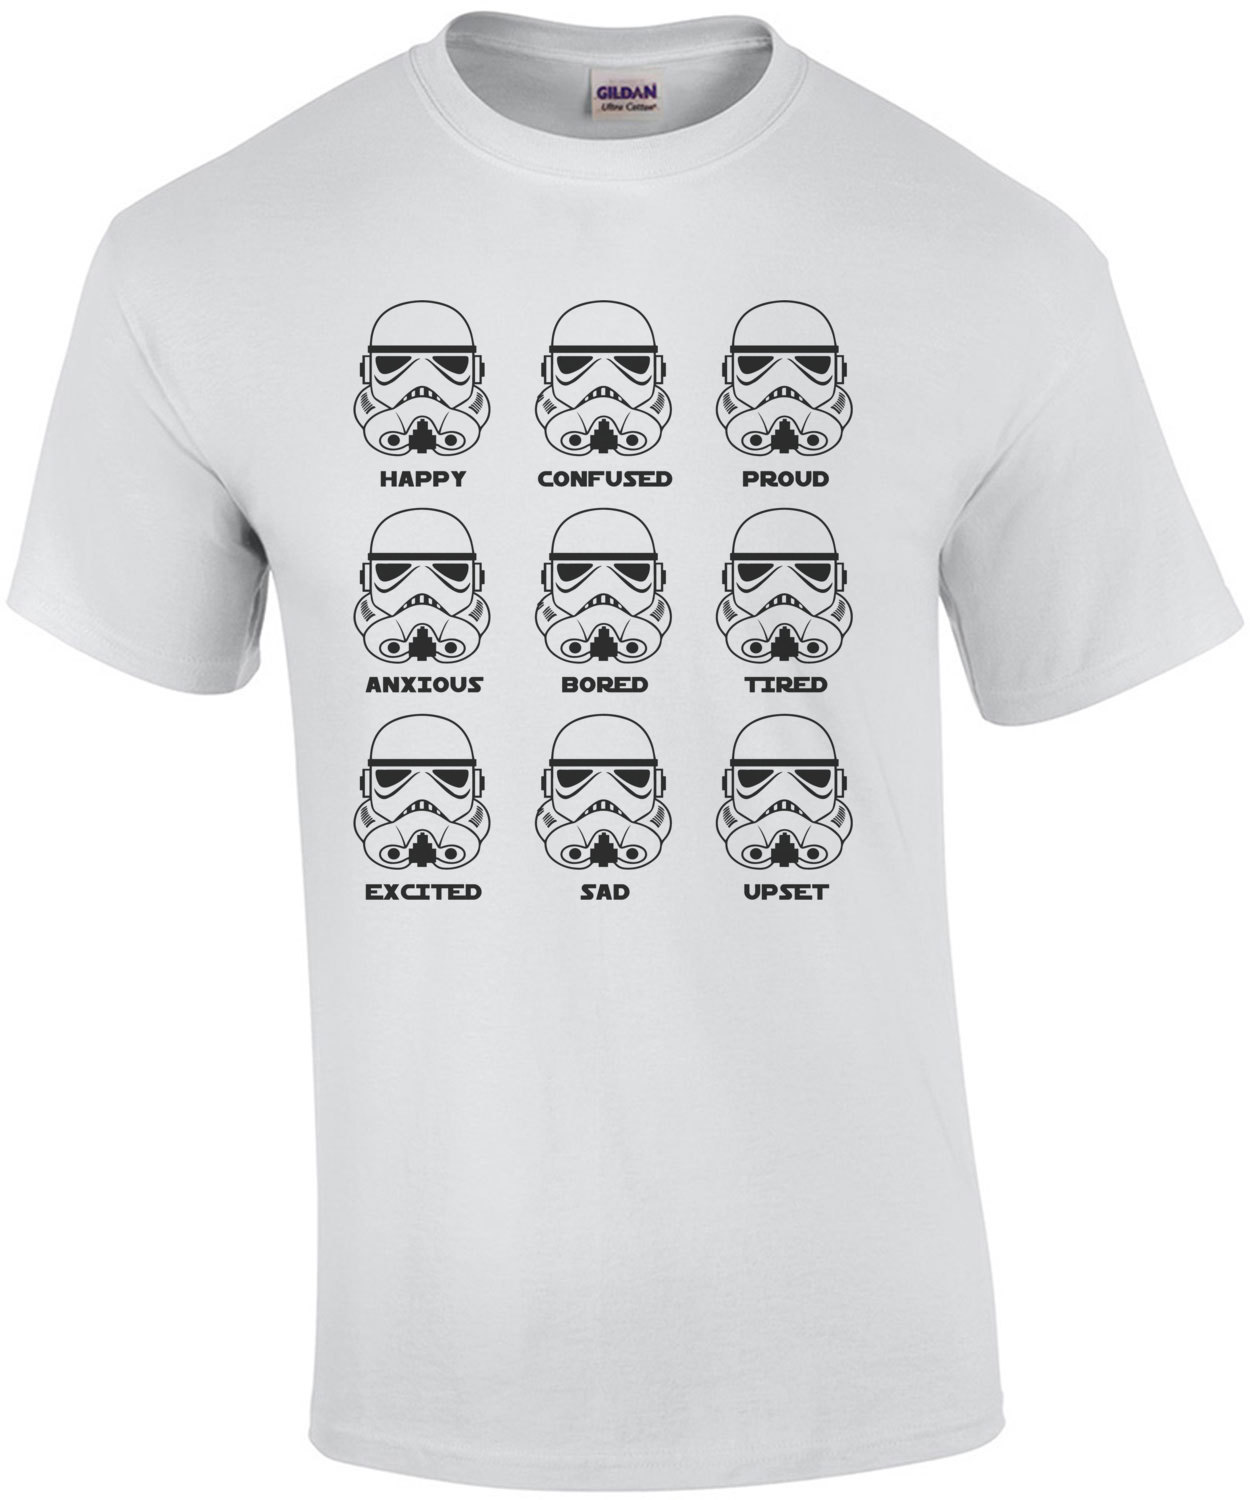 stormtrooper emotions t shirt